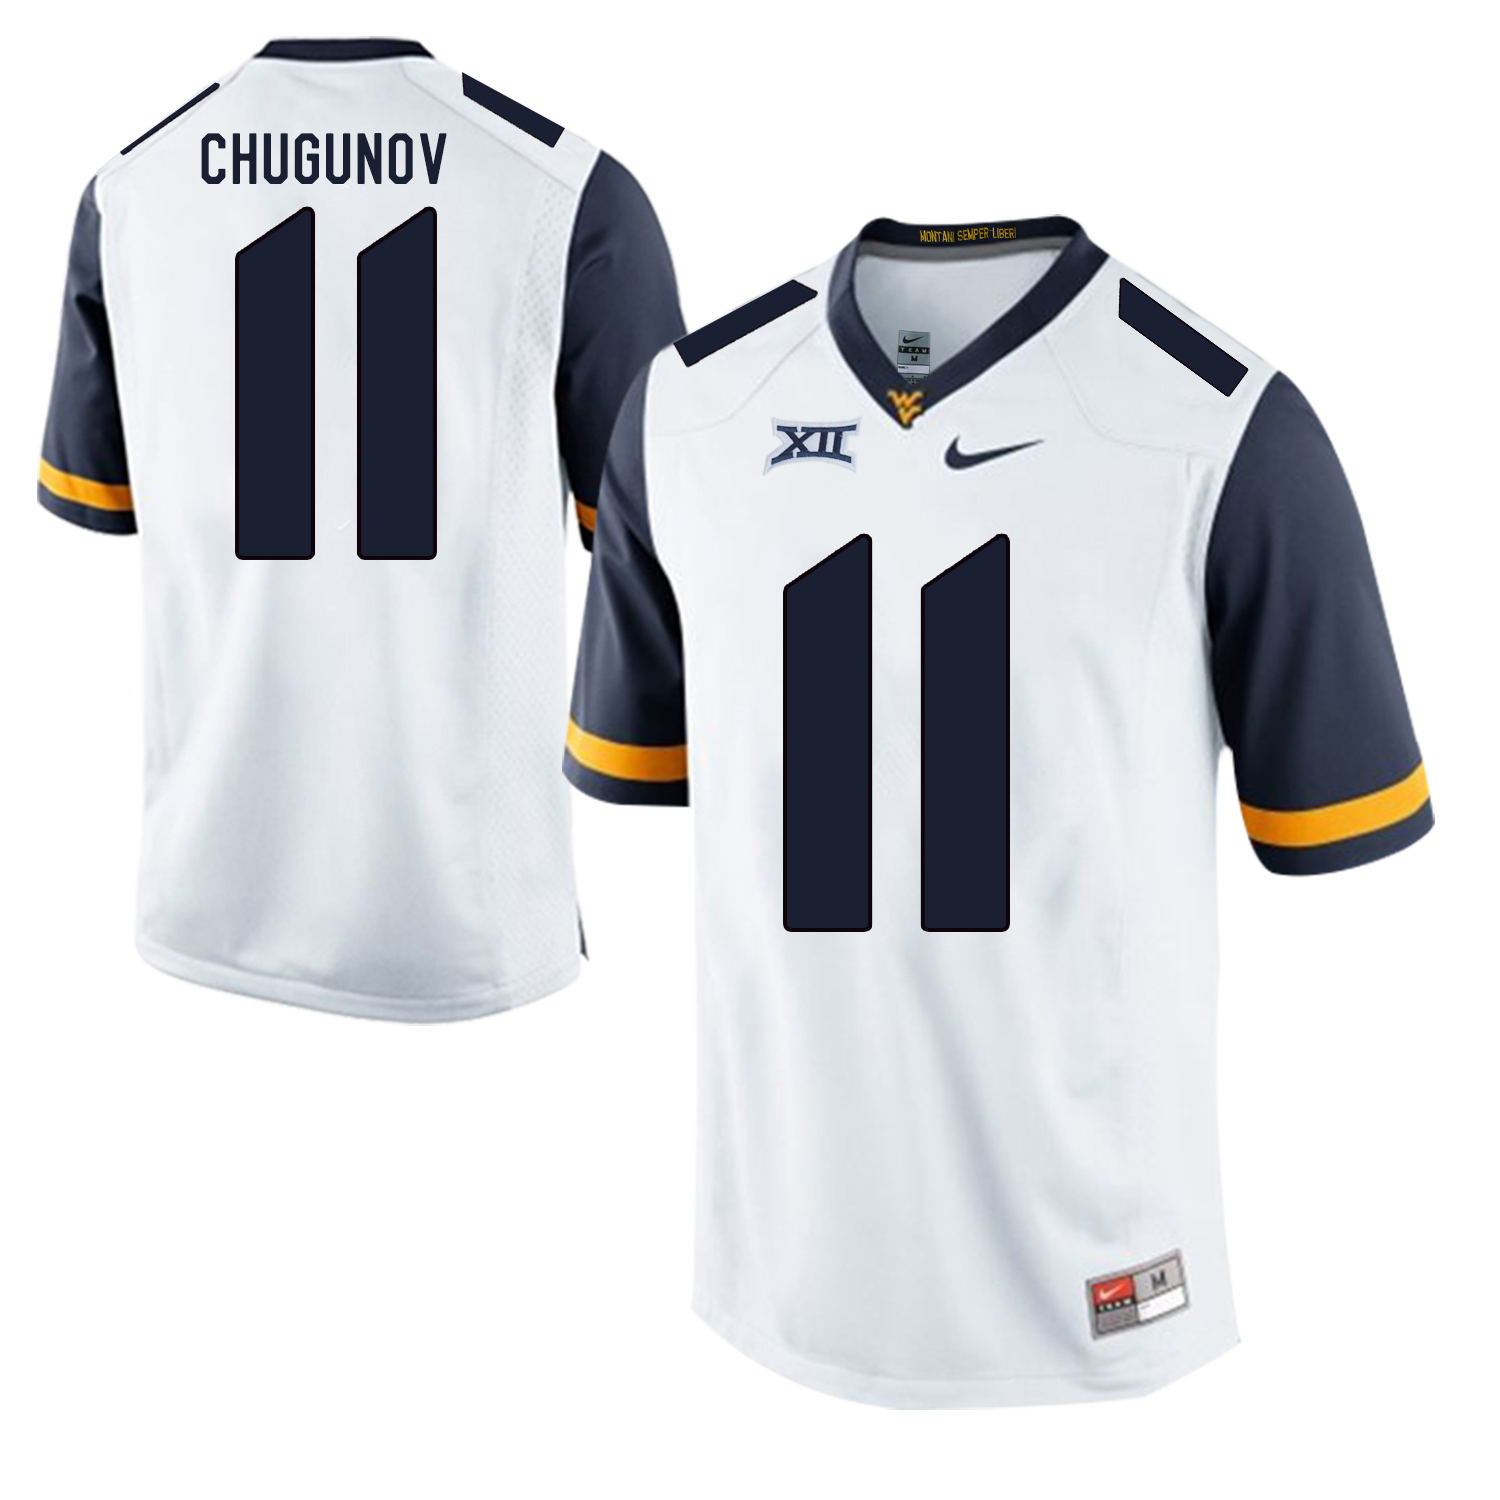 West Virginia Mountaineers 11 Chris Chugunov White College Football Jersey